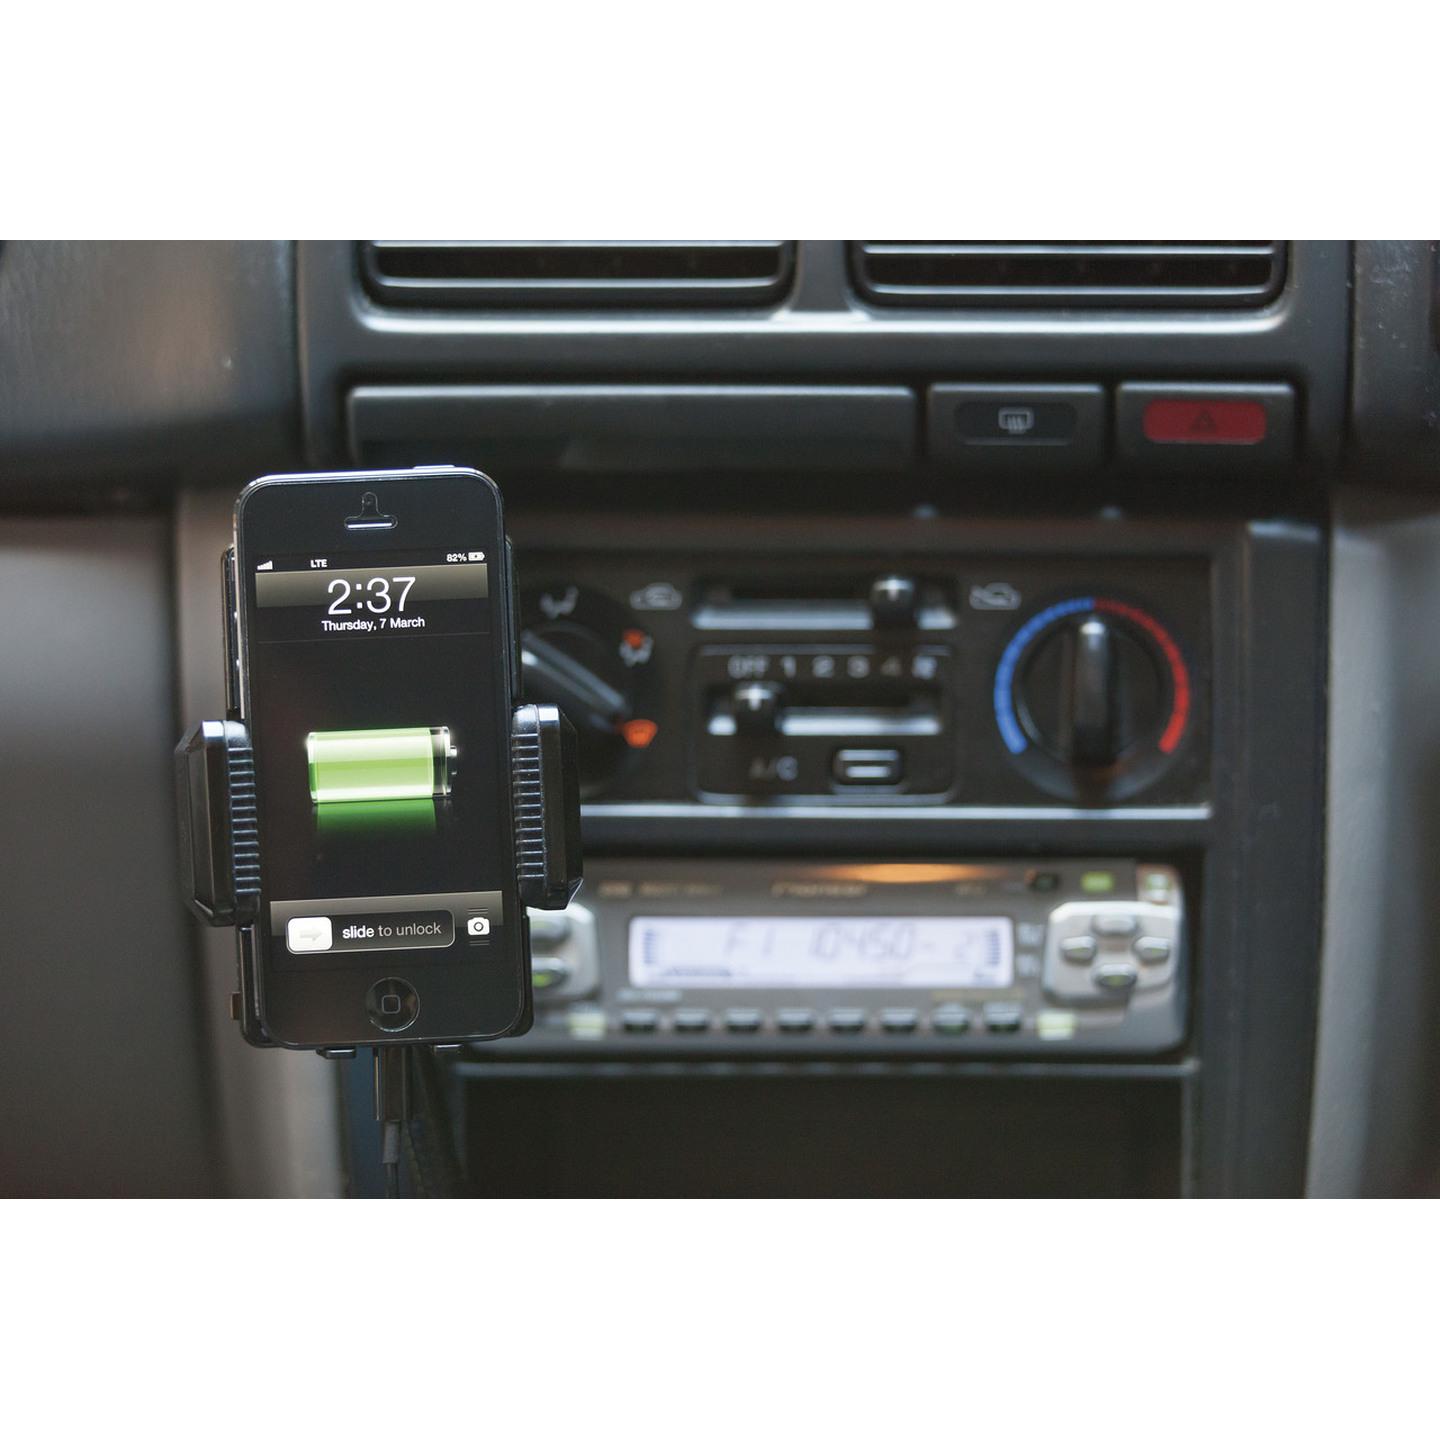 Transmitter/Charger/Gooseneck In-car Holder